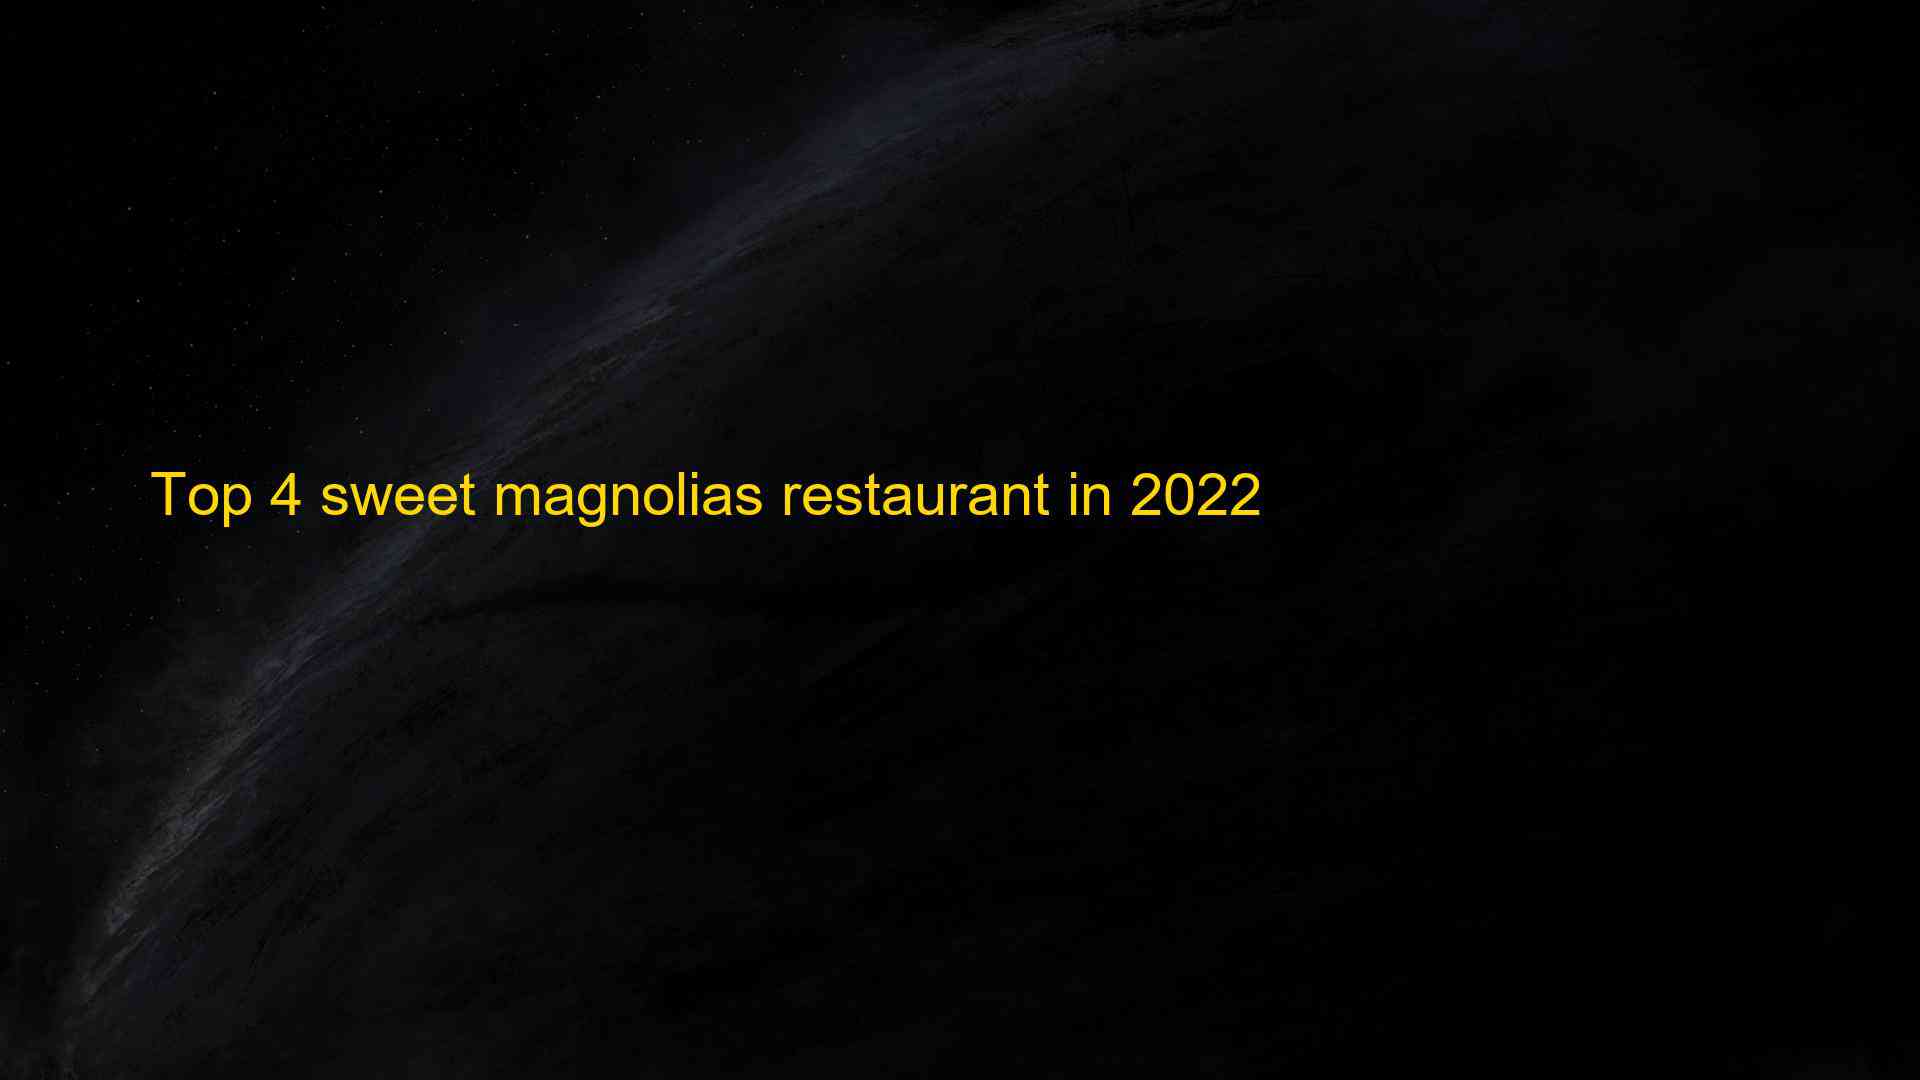 Top 4 sweet magnolias restaurant in 2022 1662840414